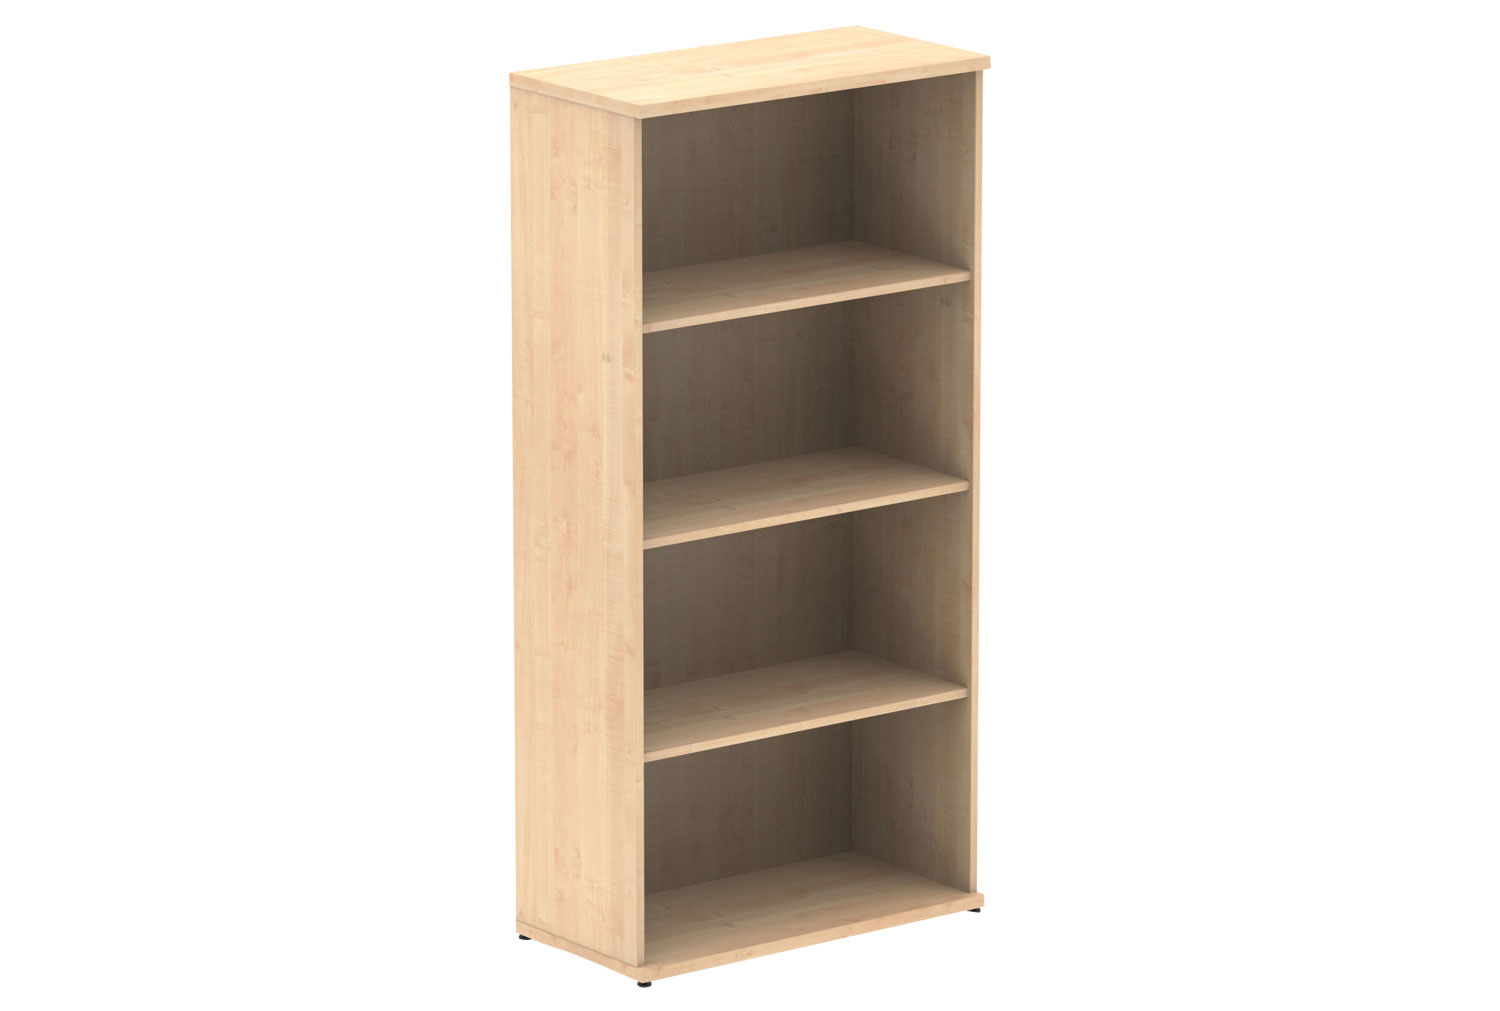 Vitali Office Bookcases, 3 Shelf - 80wx40dx160h (cm), Maple